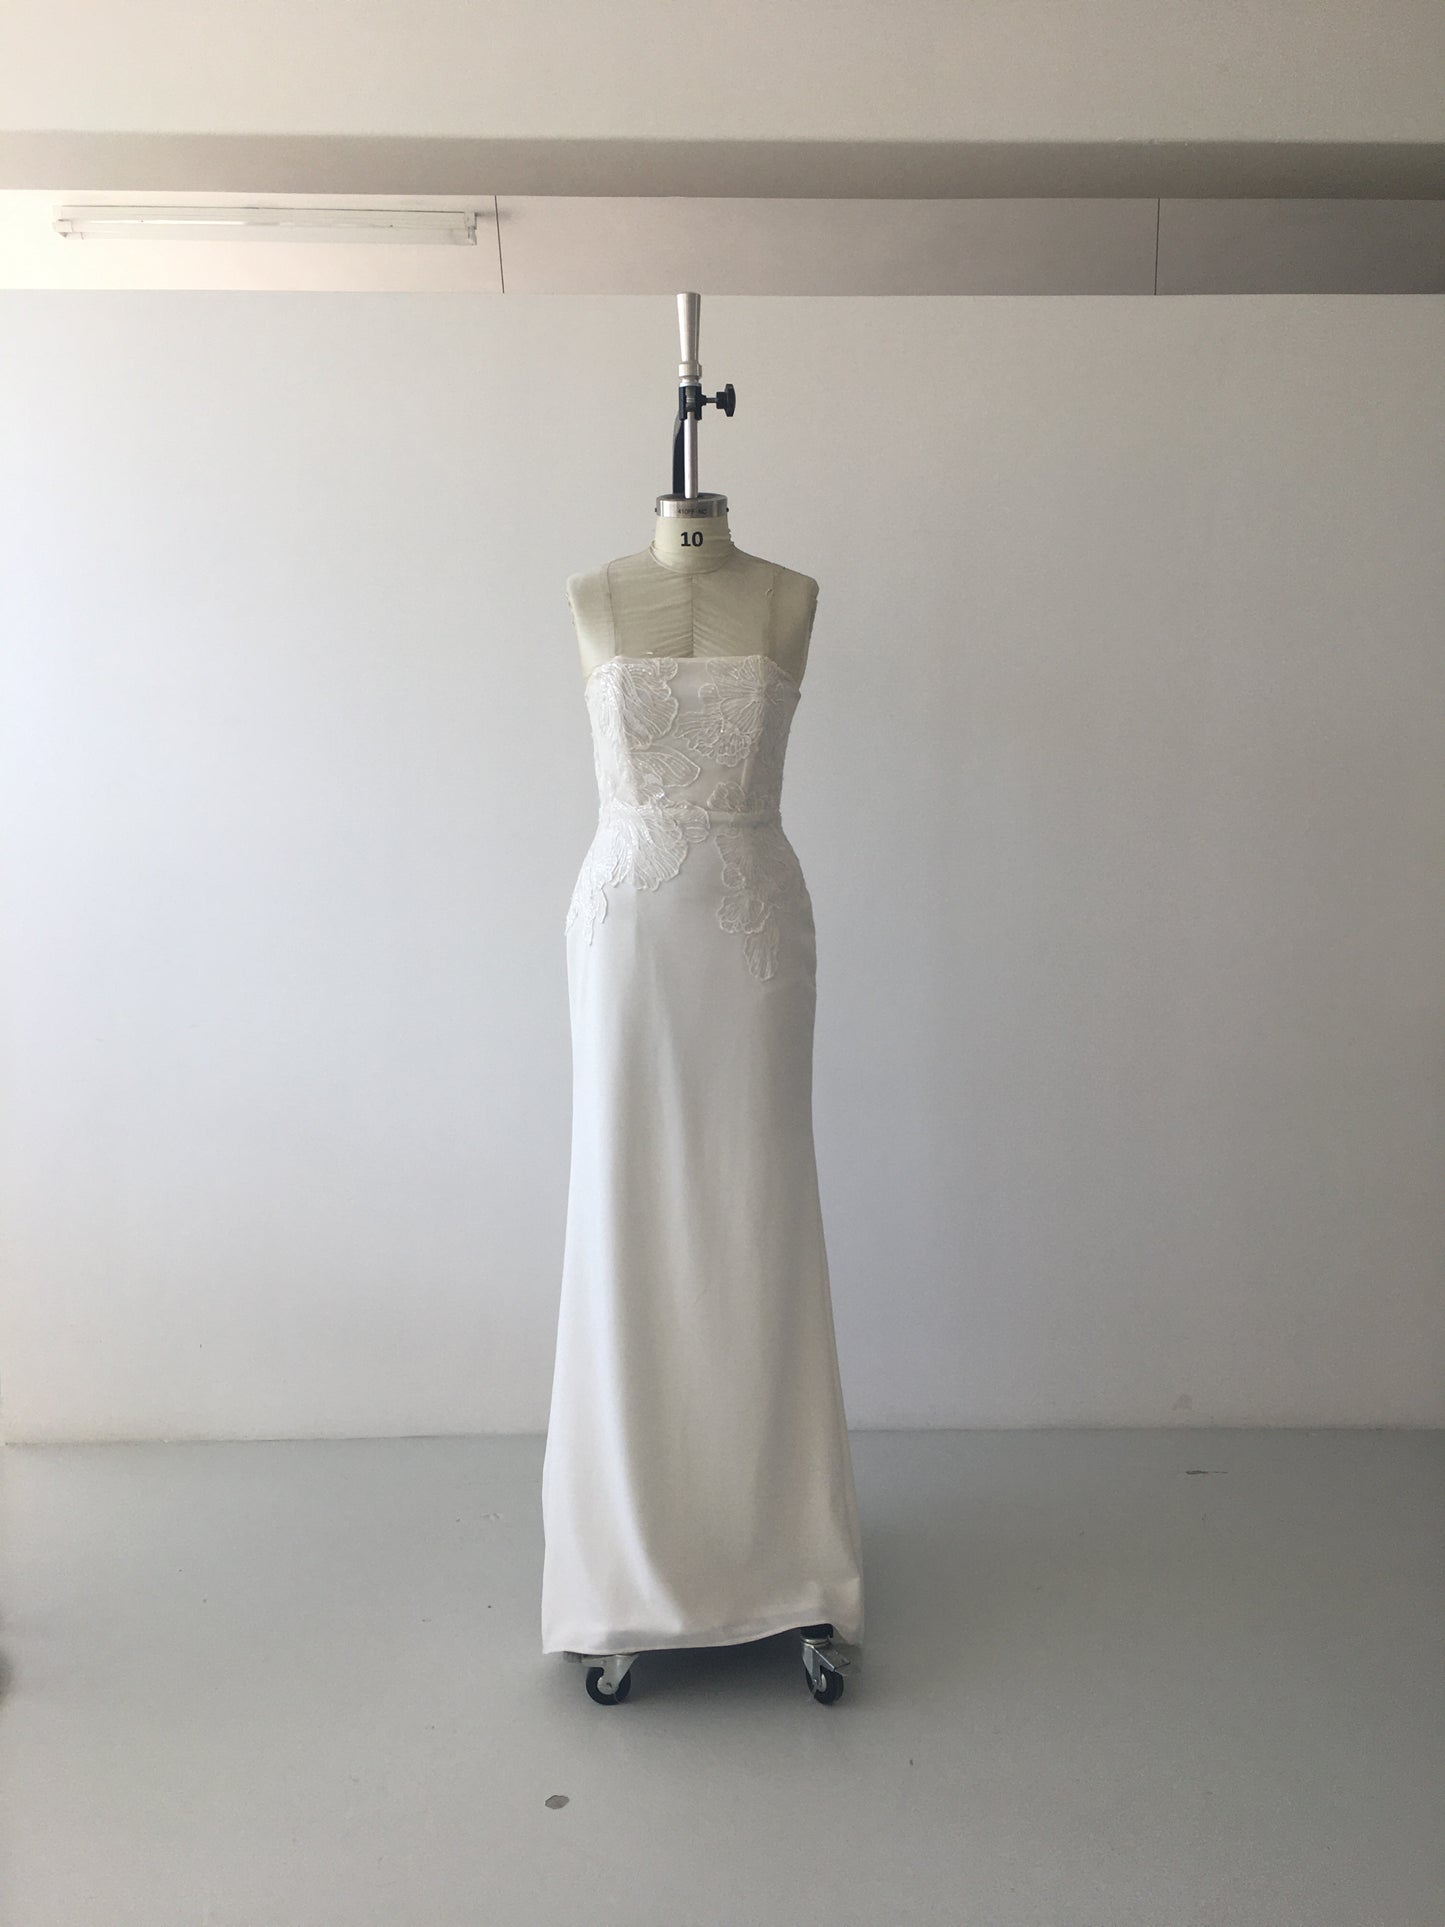 Bloom | Dresses | Sadie Bosworth Atelier